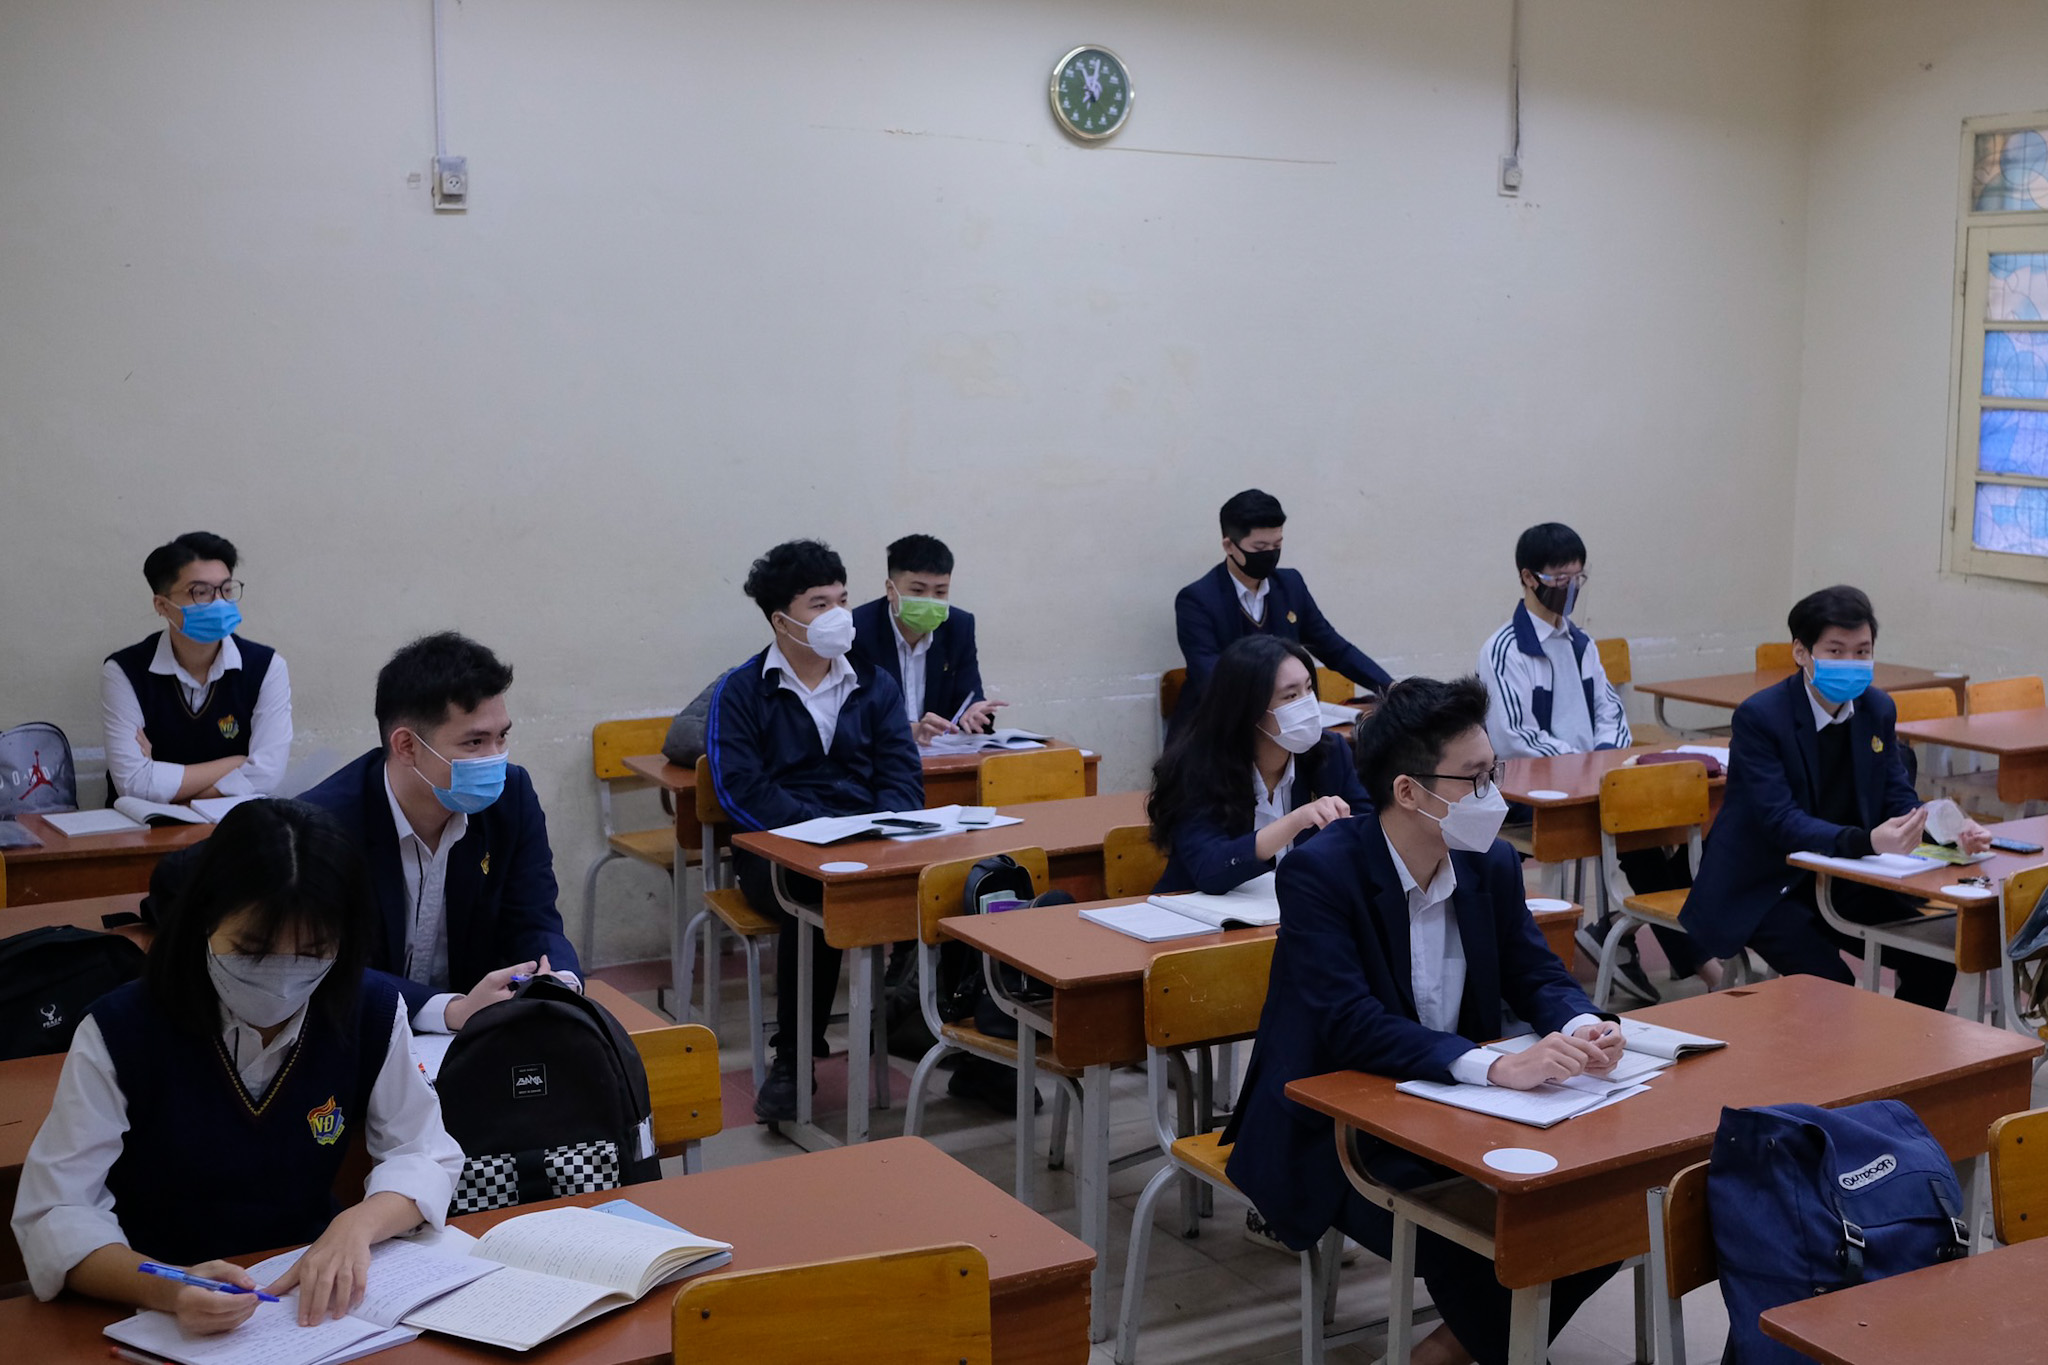 Twelfth graders attend an in-person class at Viet Duc High School in Hoan Kiem District, Hanoi, December 6, 2021. Photo: Tuoi Tre